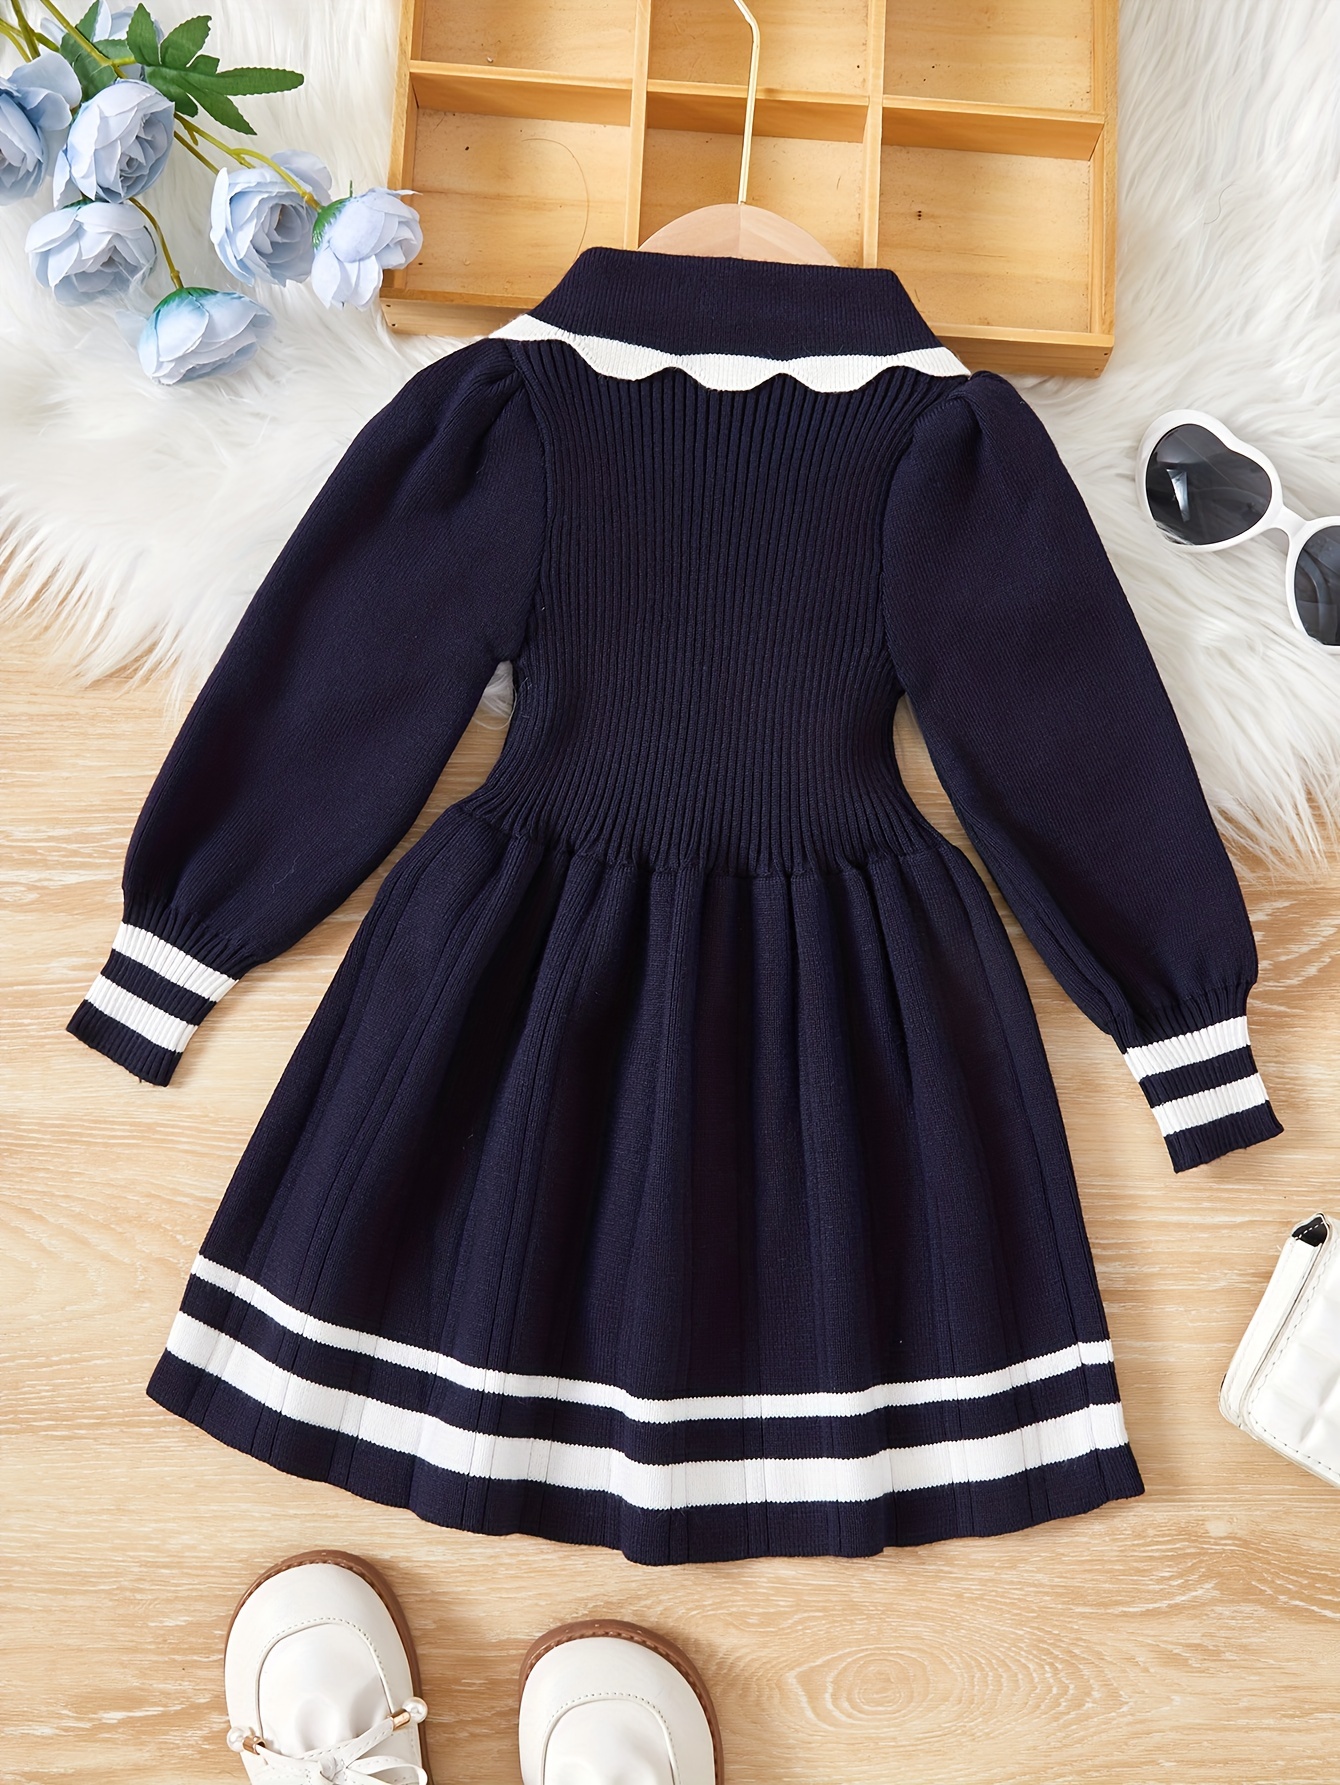 Cheap Autumn Kids Dresses for Girls Fashion Little Girls Costume Warm Knit  Sweater Dress Cute School Clothes